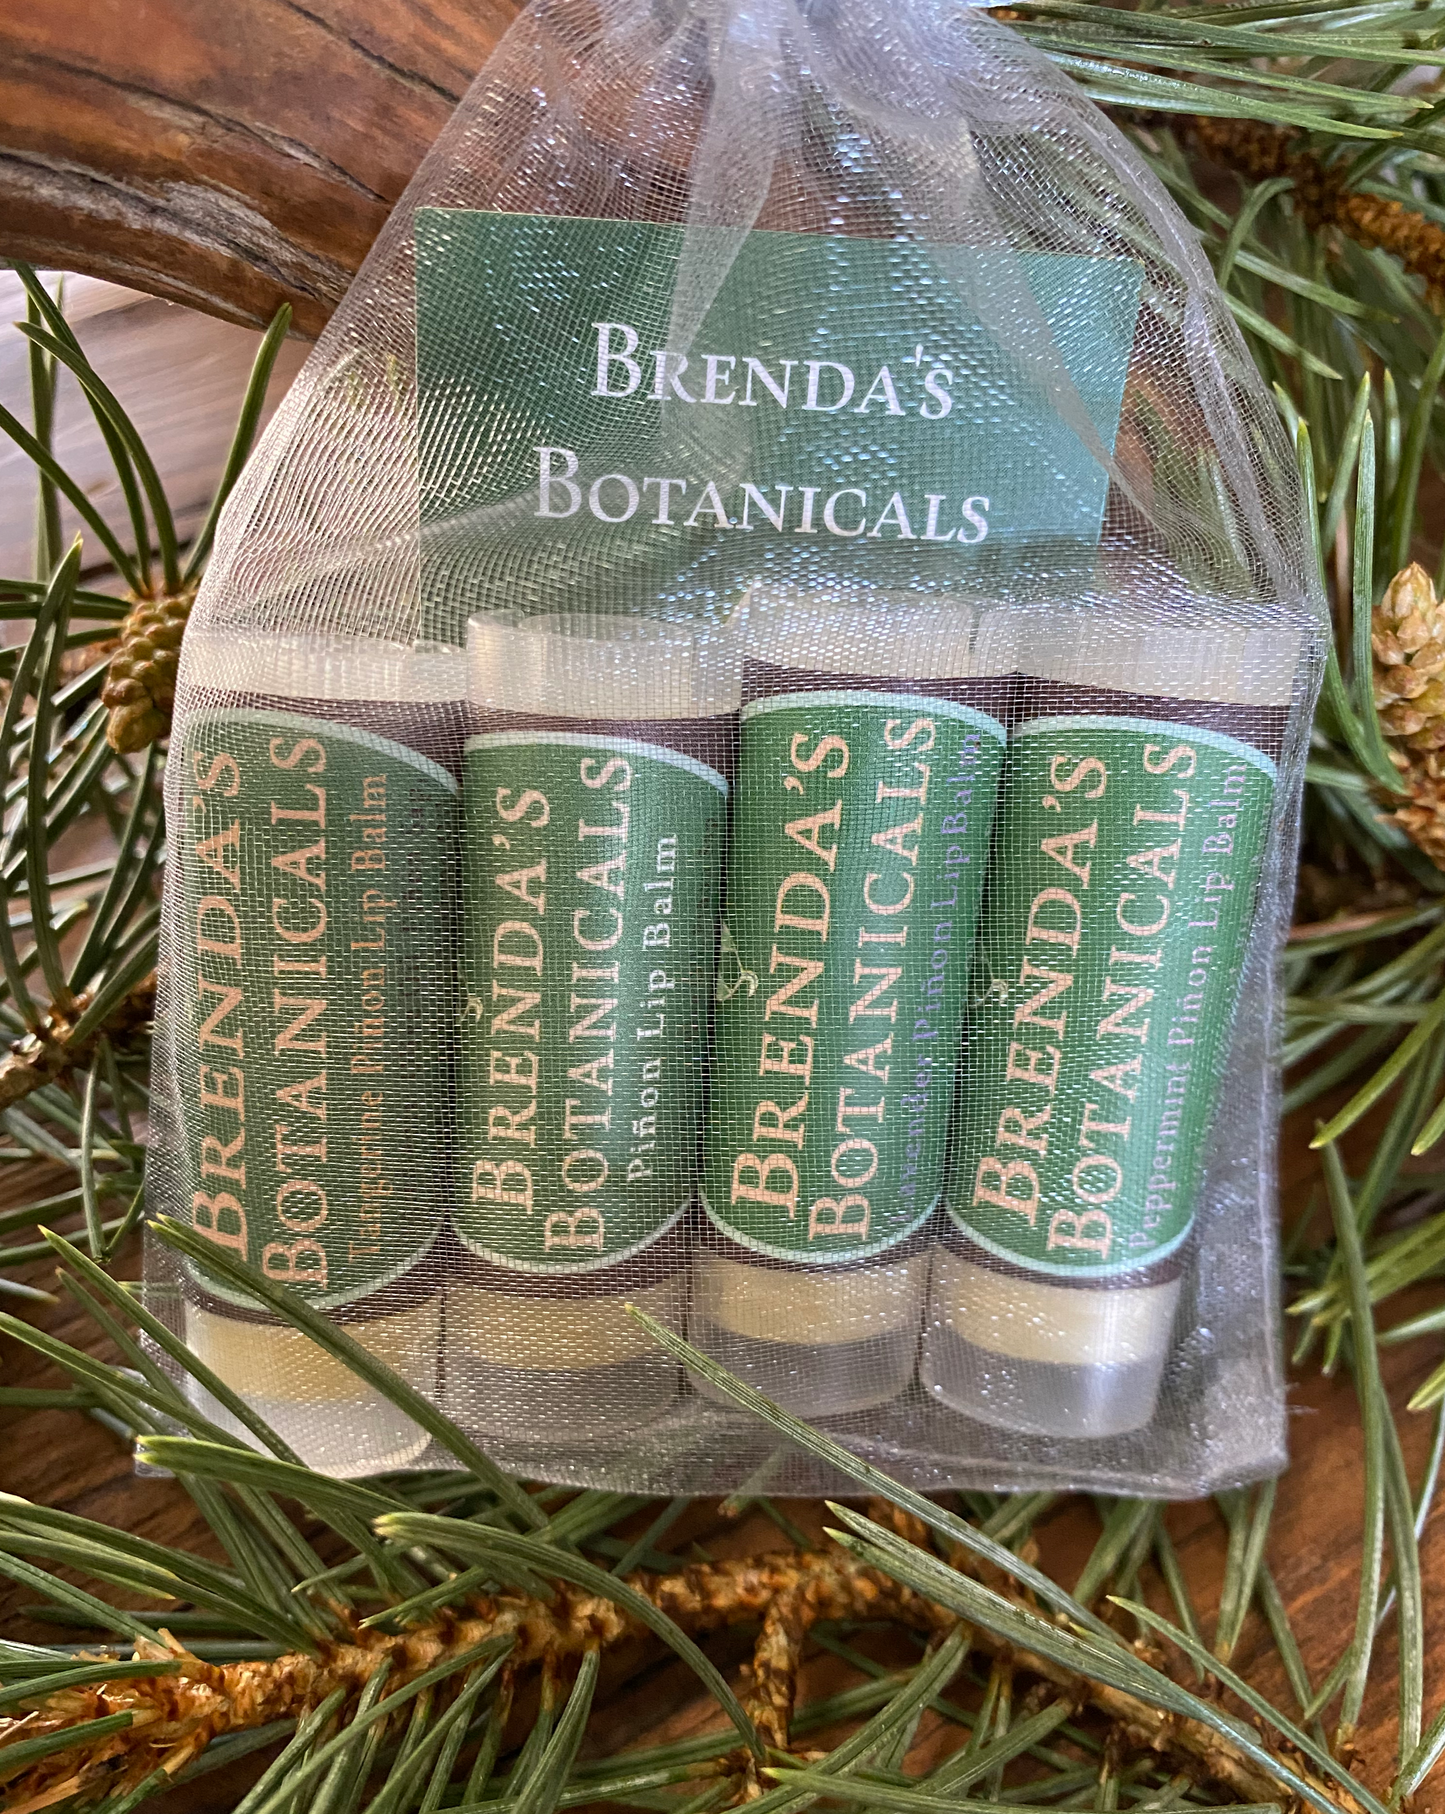 Piñon lip balm sampler pack Brenda's Botanicals Taos